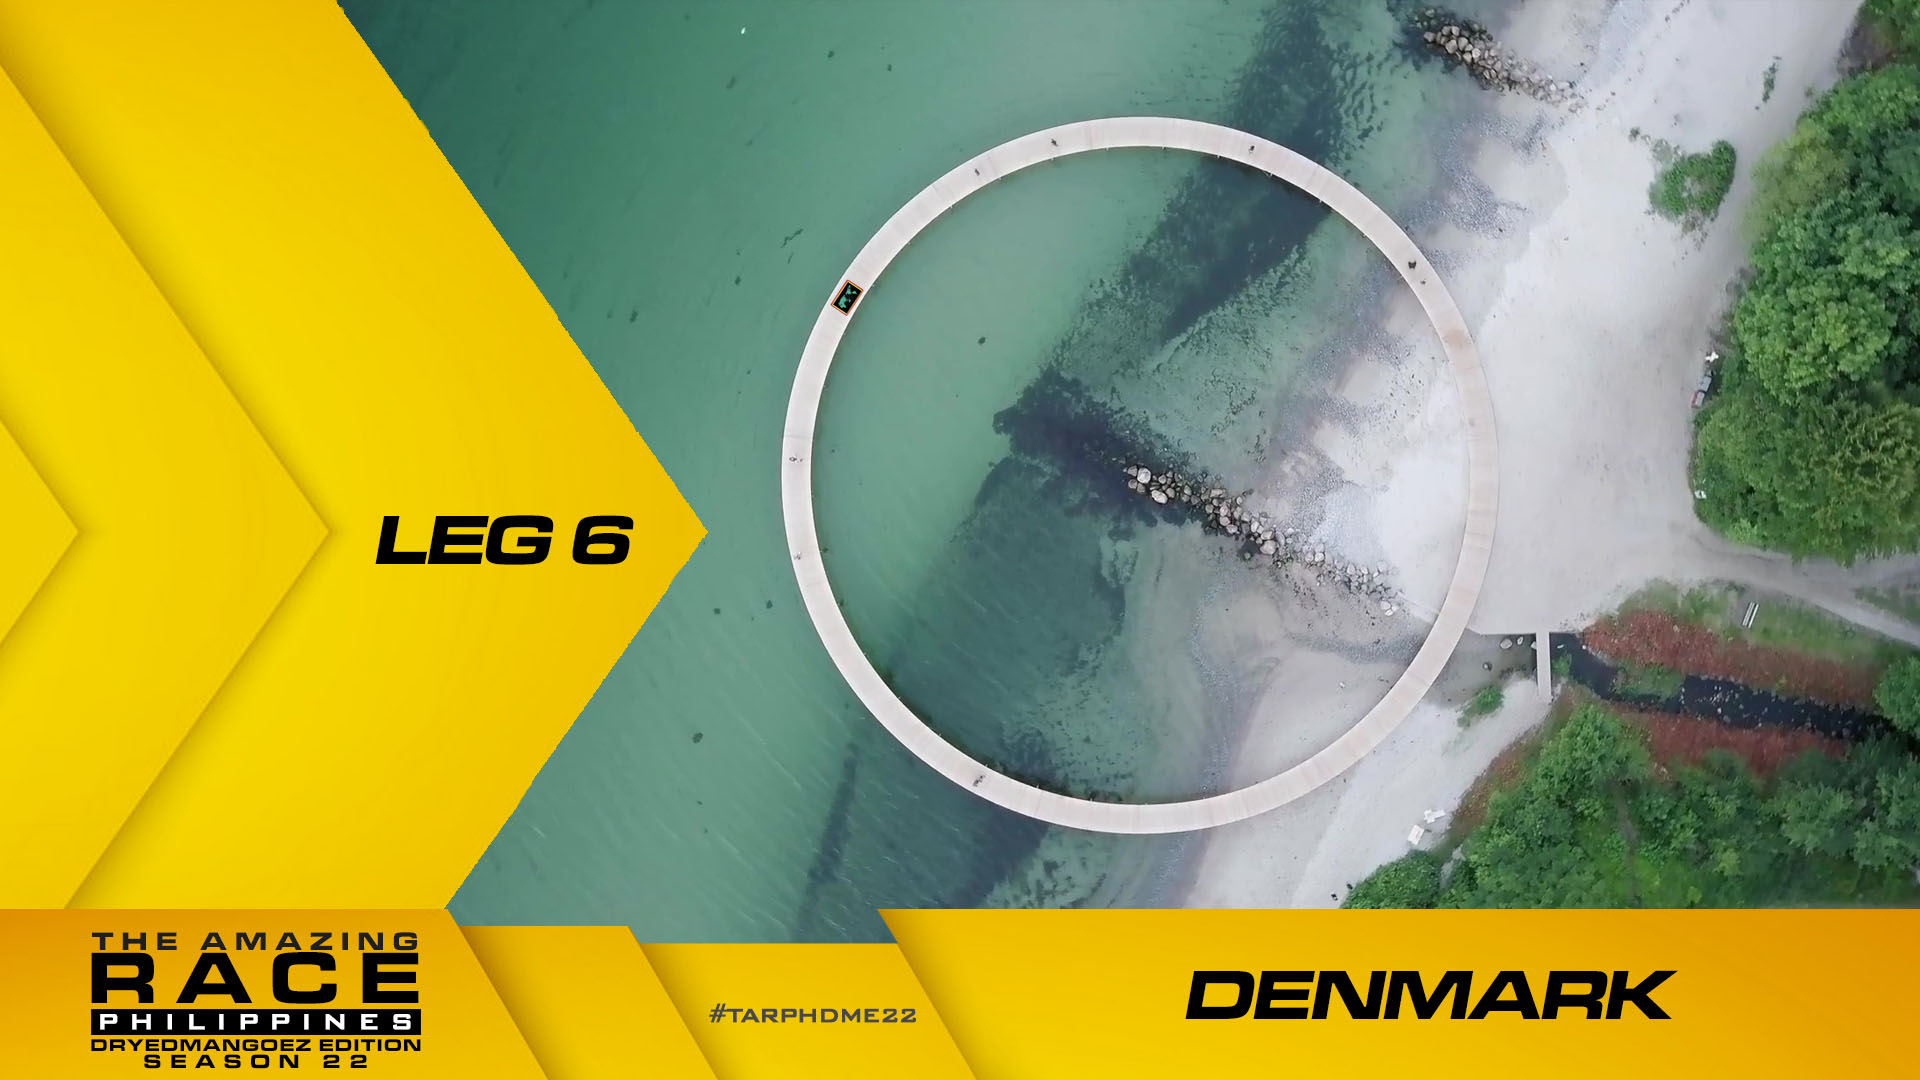 The Amazing Race Philippines: DryedMangoez Edition Season 22, Leg 6 – Denmark